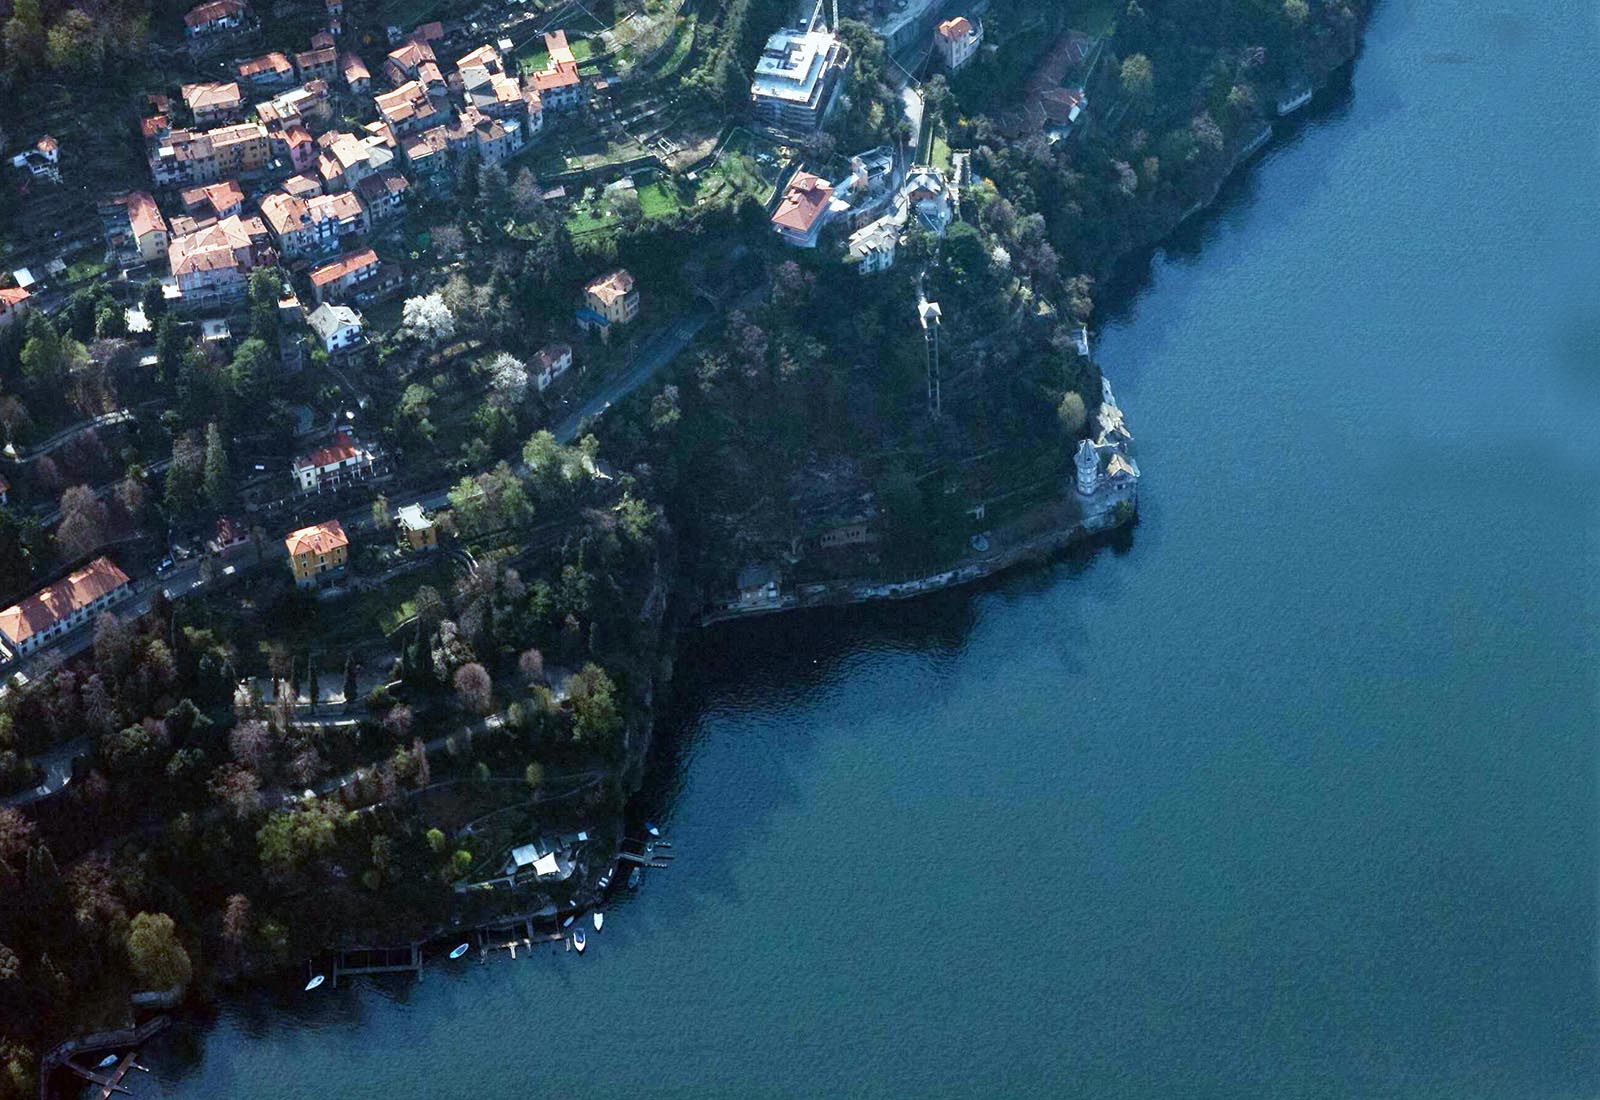 Historic villa in Blevio - Aerial view